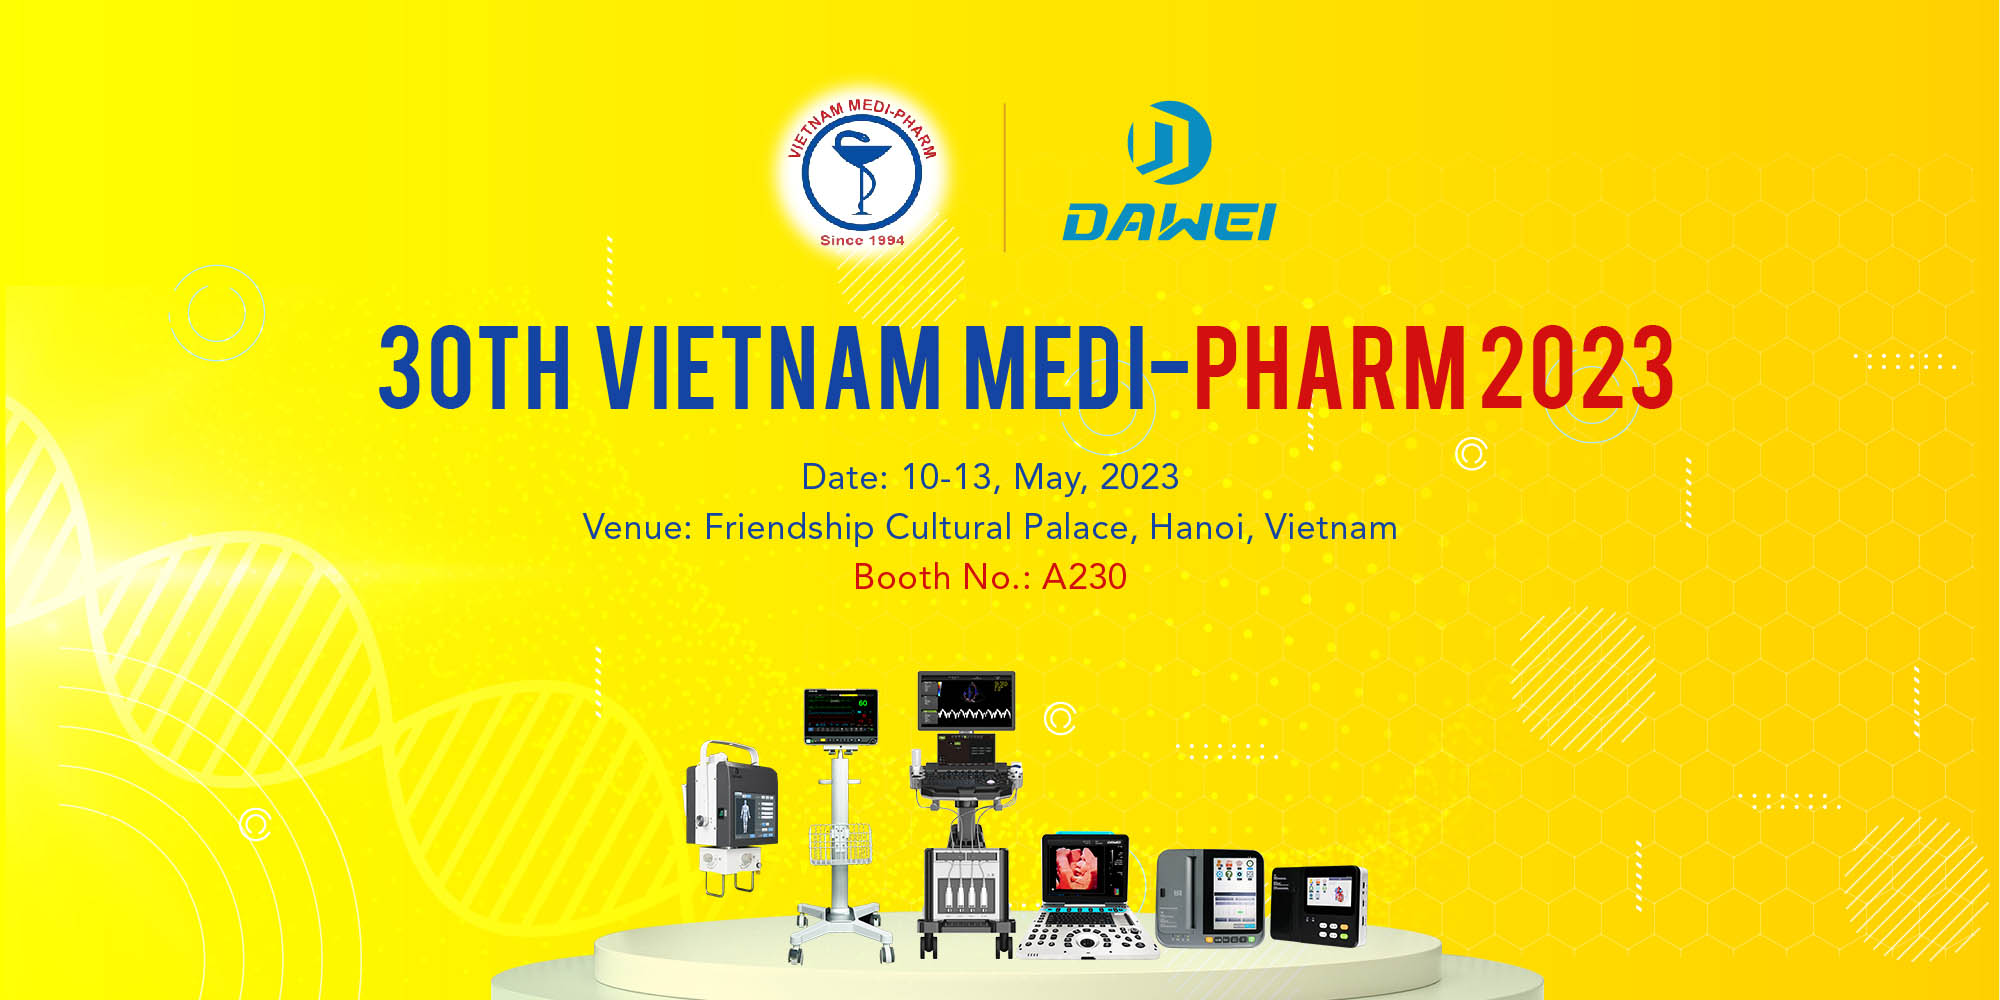 dawei Medical მიიღებს მონაწილეობას 30th Vietnam Medi-Pharm 2023